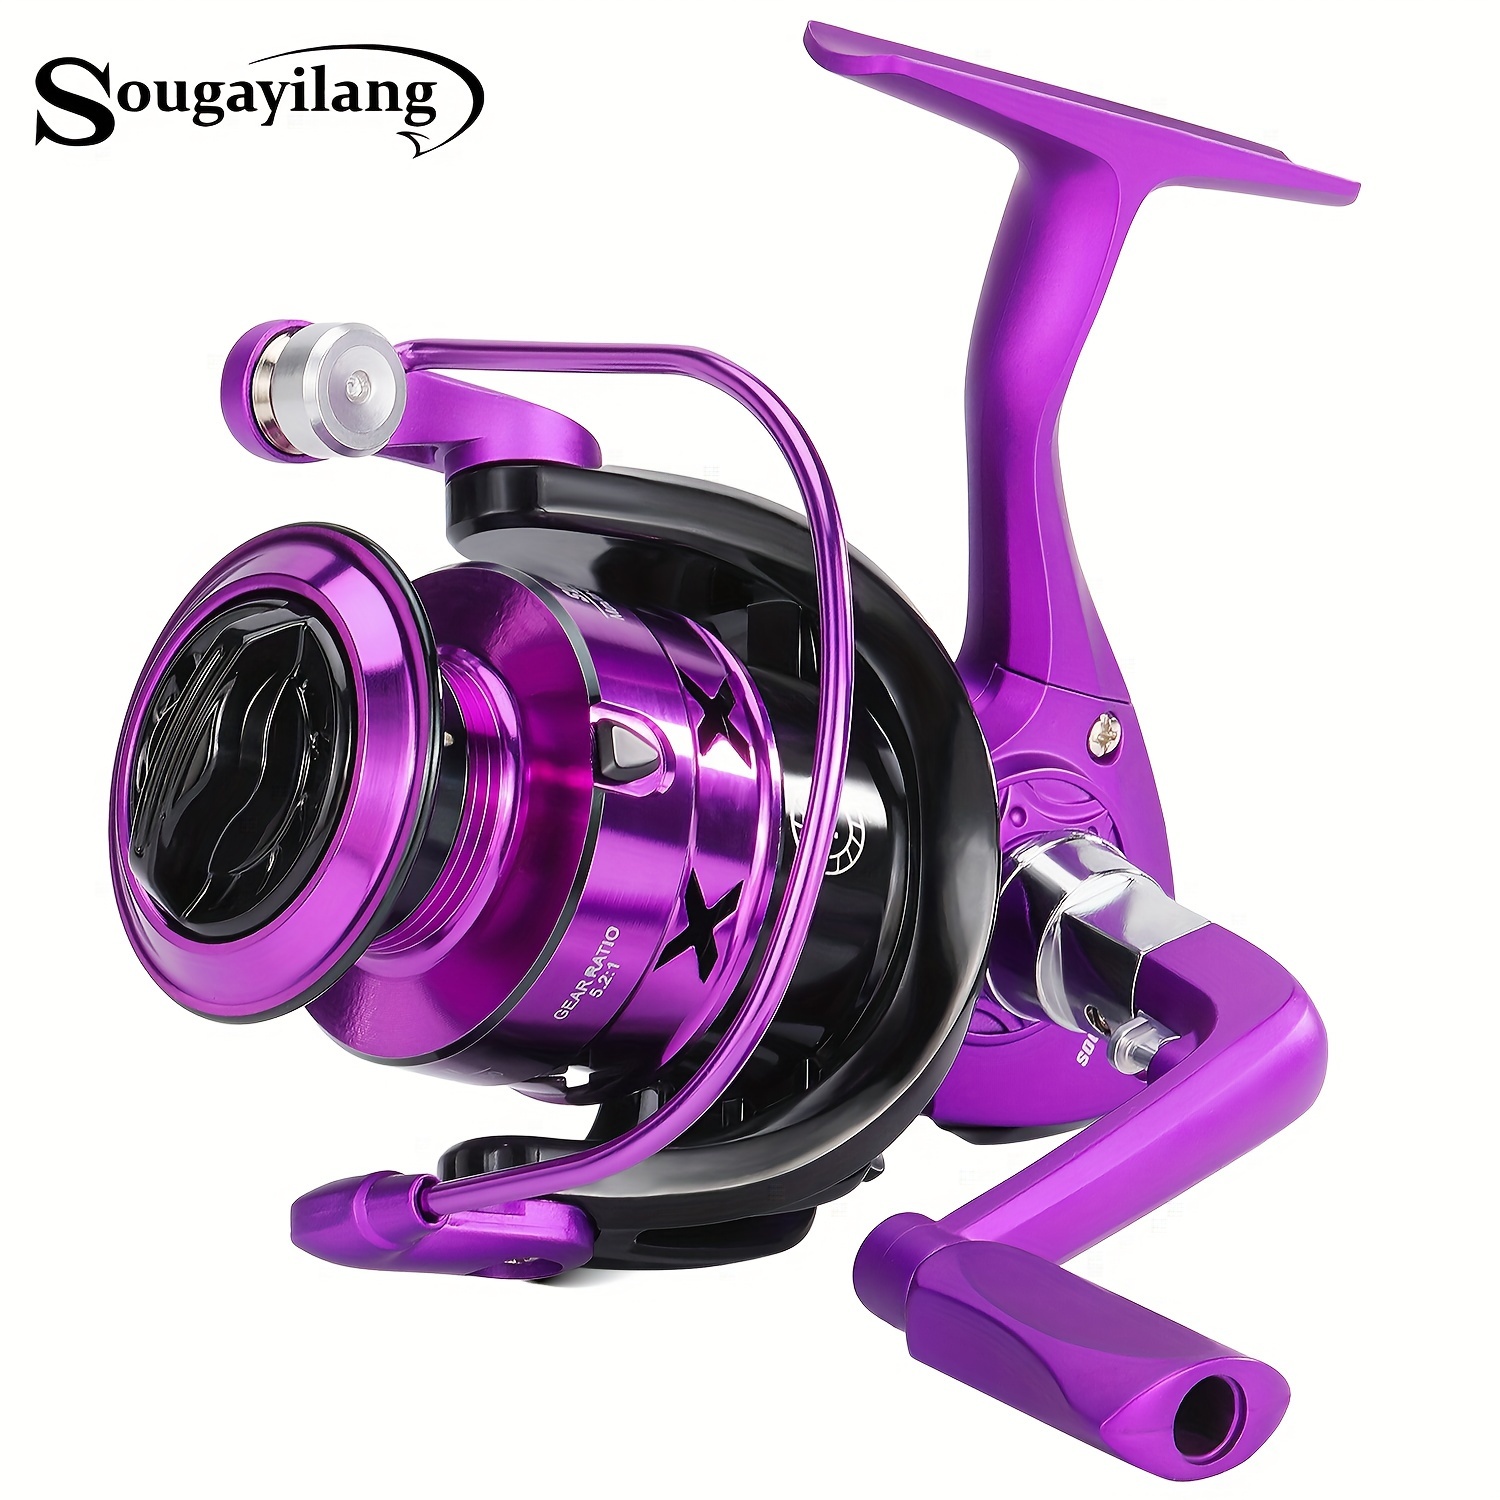 Sougayilang Spinning Fishing Reel Aluminum Spool Powerful Reel 5.2:1 Gear  Ratio, Ultra-smooth Fishing Reel For Traveling, Beginner Fishing Reel